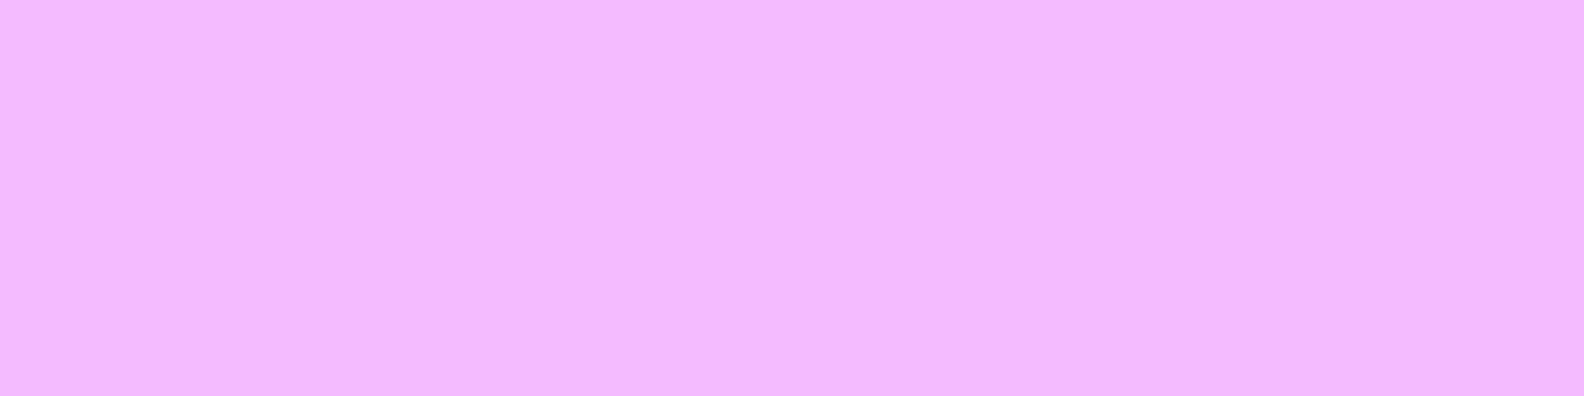 1584x396 Brilliant Lavender Solid Color Background